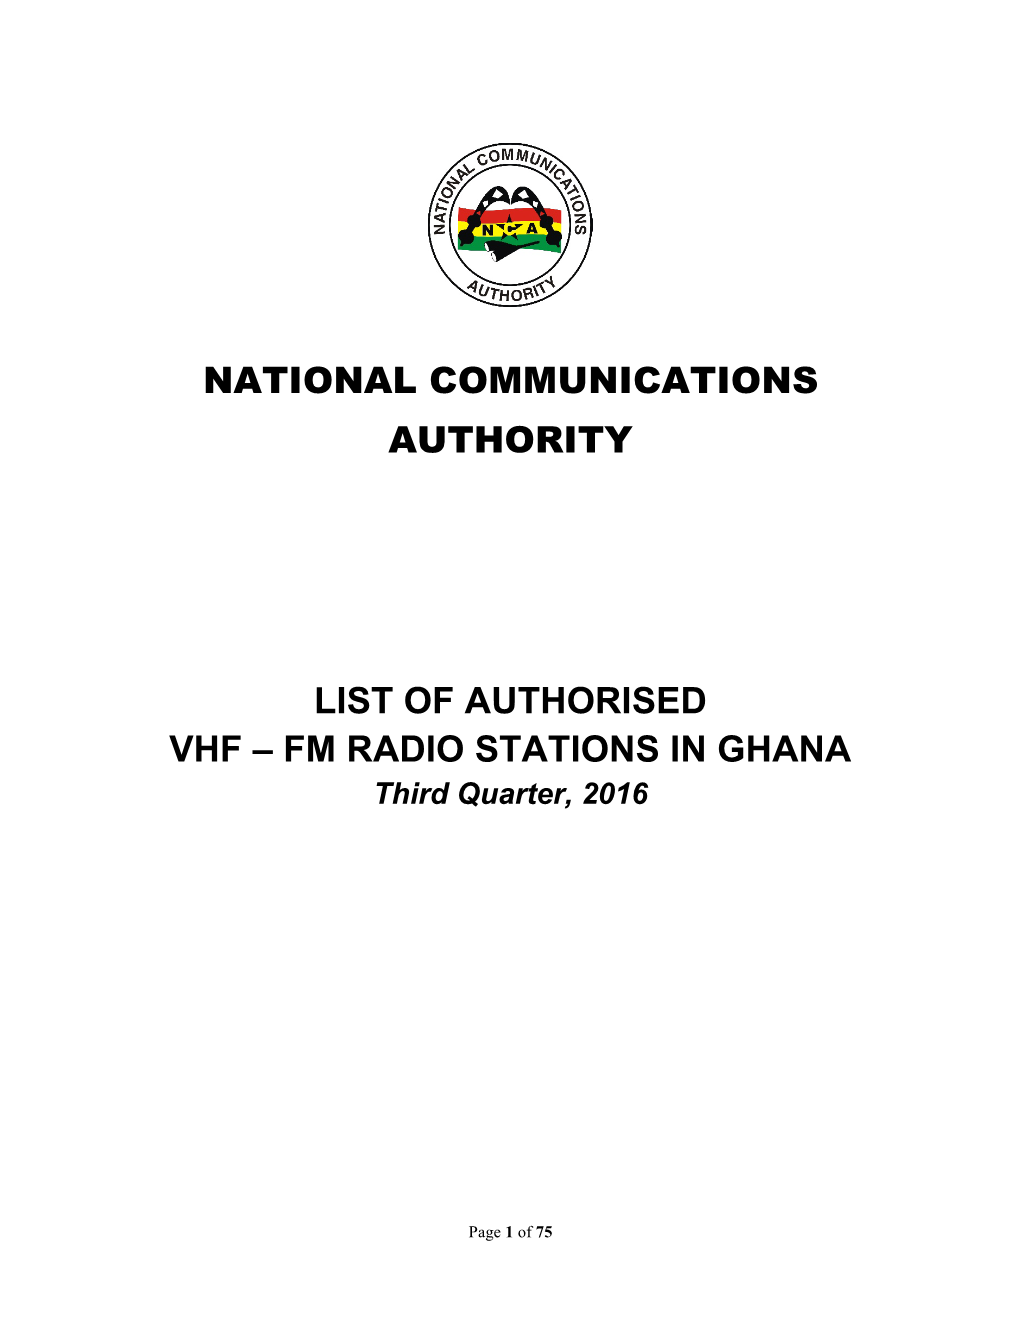 FM RADIO STATIONS in GHANA Third Quarter, 2016